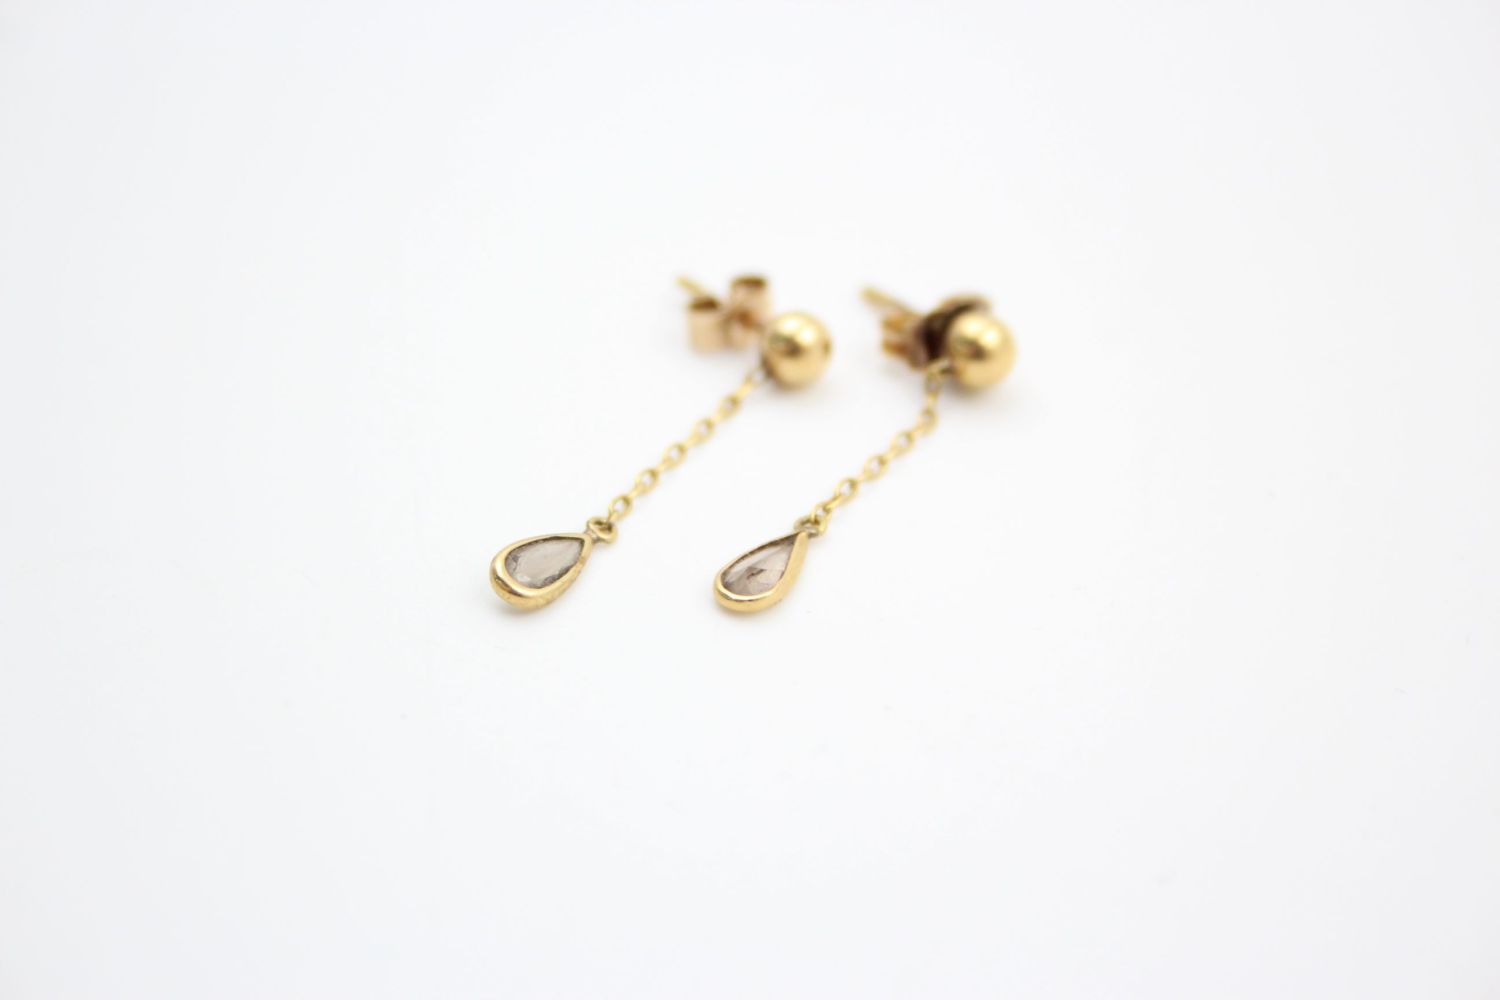 3 x 9ct gold gemstone stud earrings 2.9 grams gross - Image 9 of 11